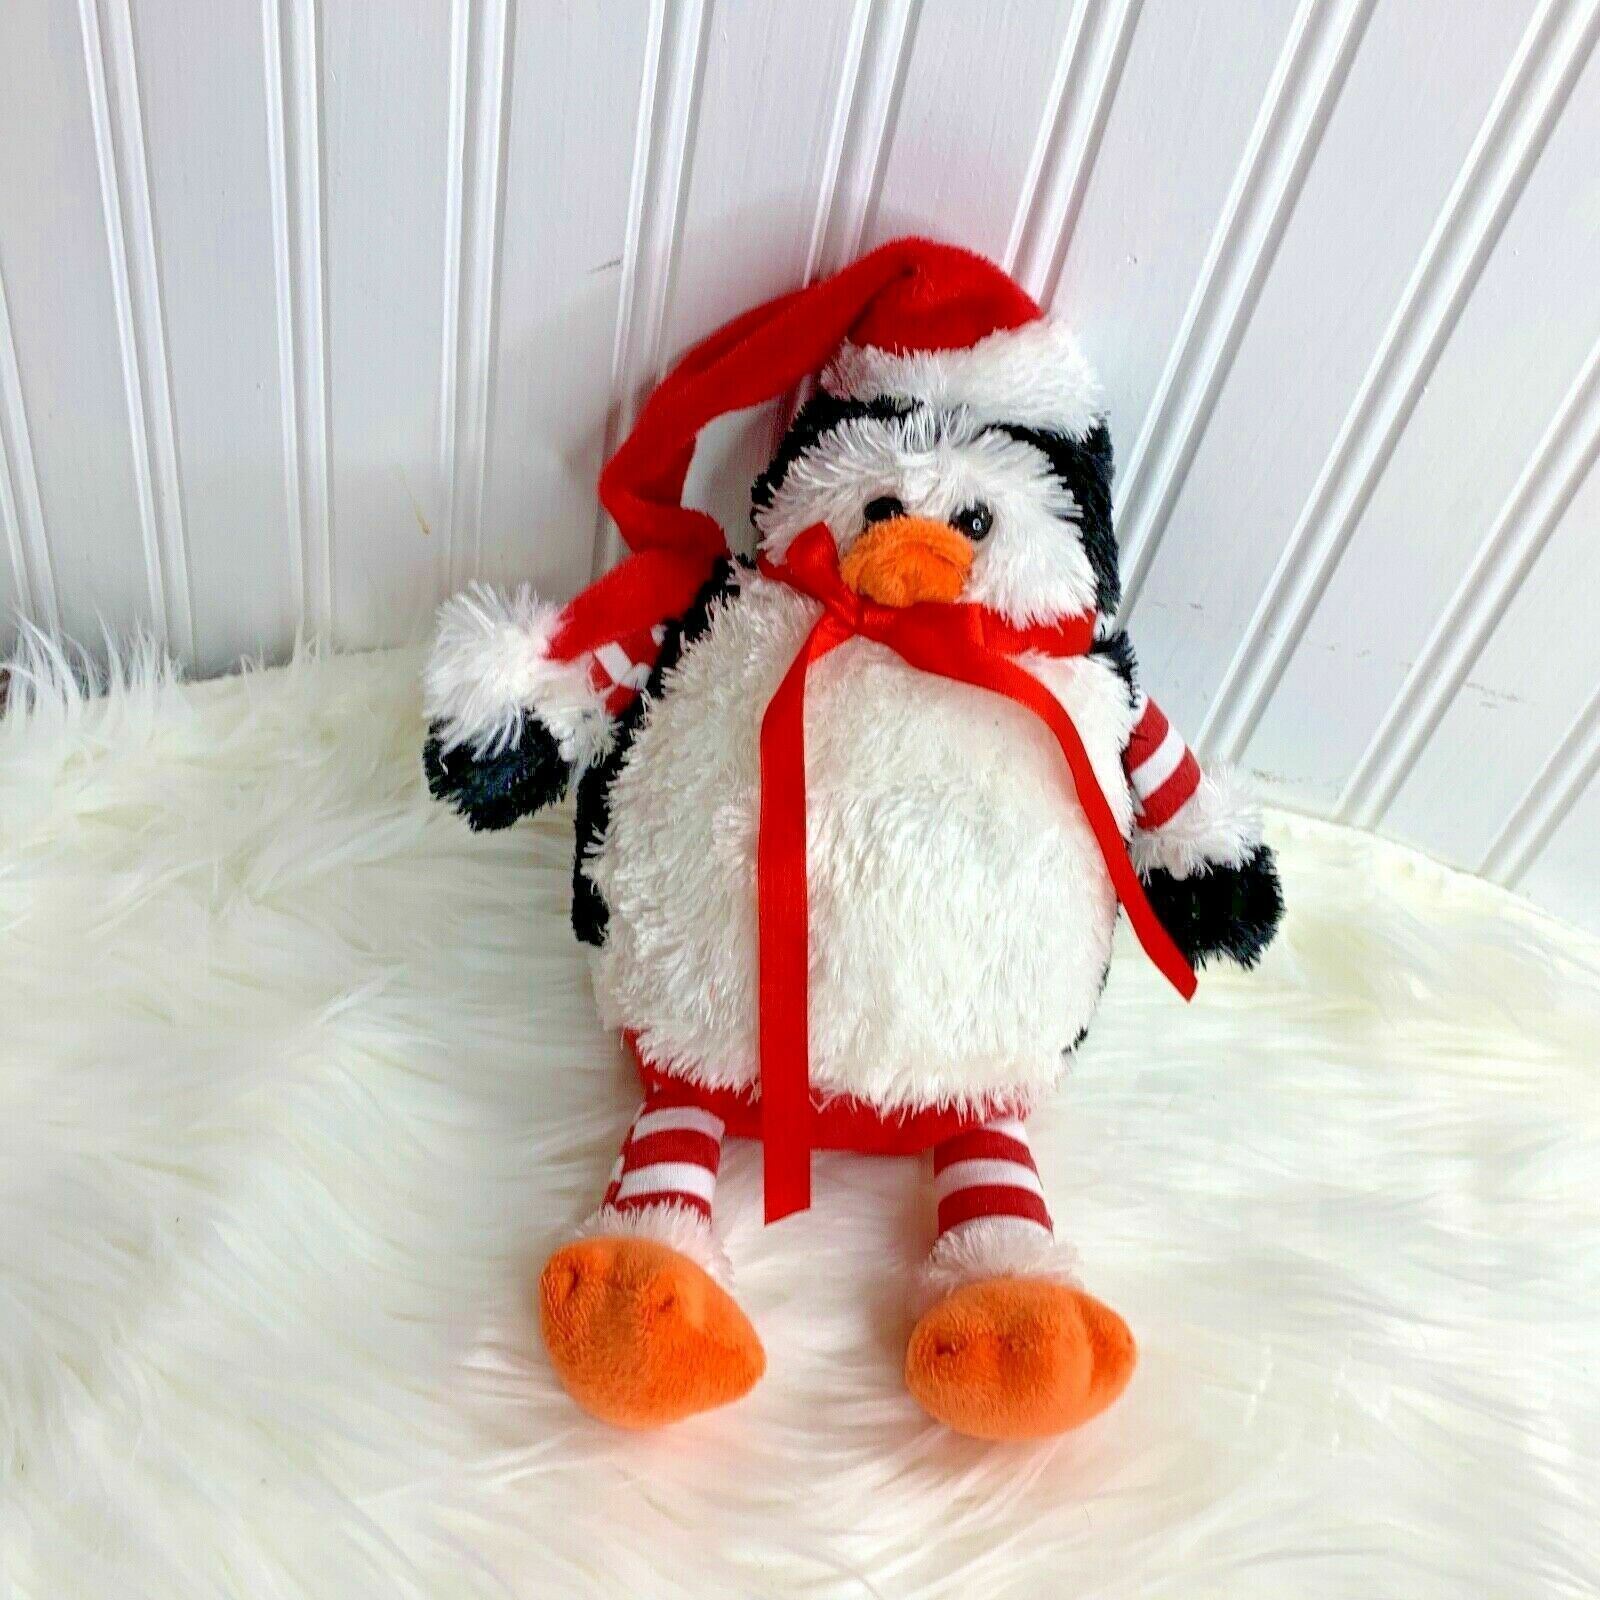 Animal Adventure Pengiun Plush Stuffed Animal Toy Fluffy 11 in Tall Santa hat Sc - $11.88